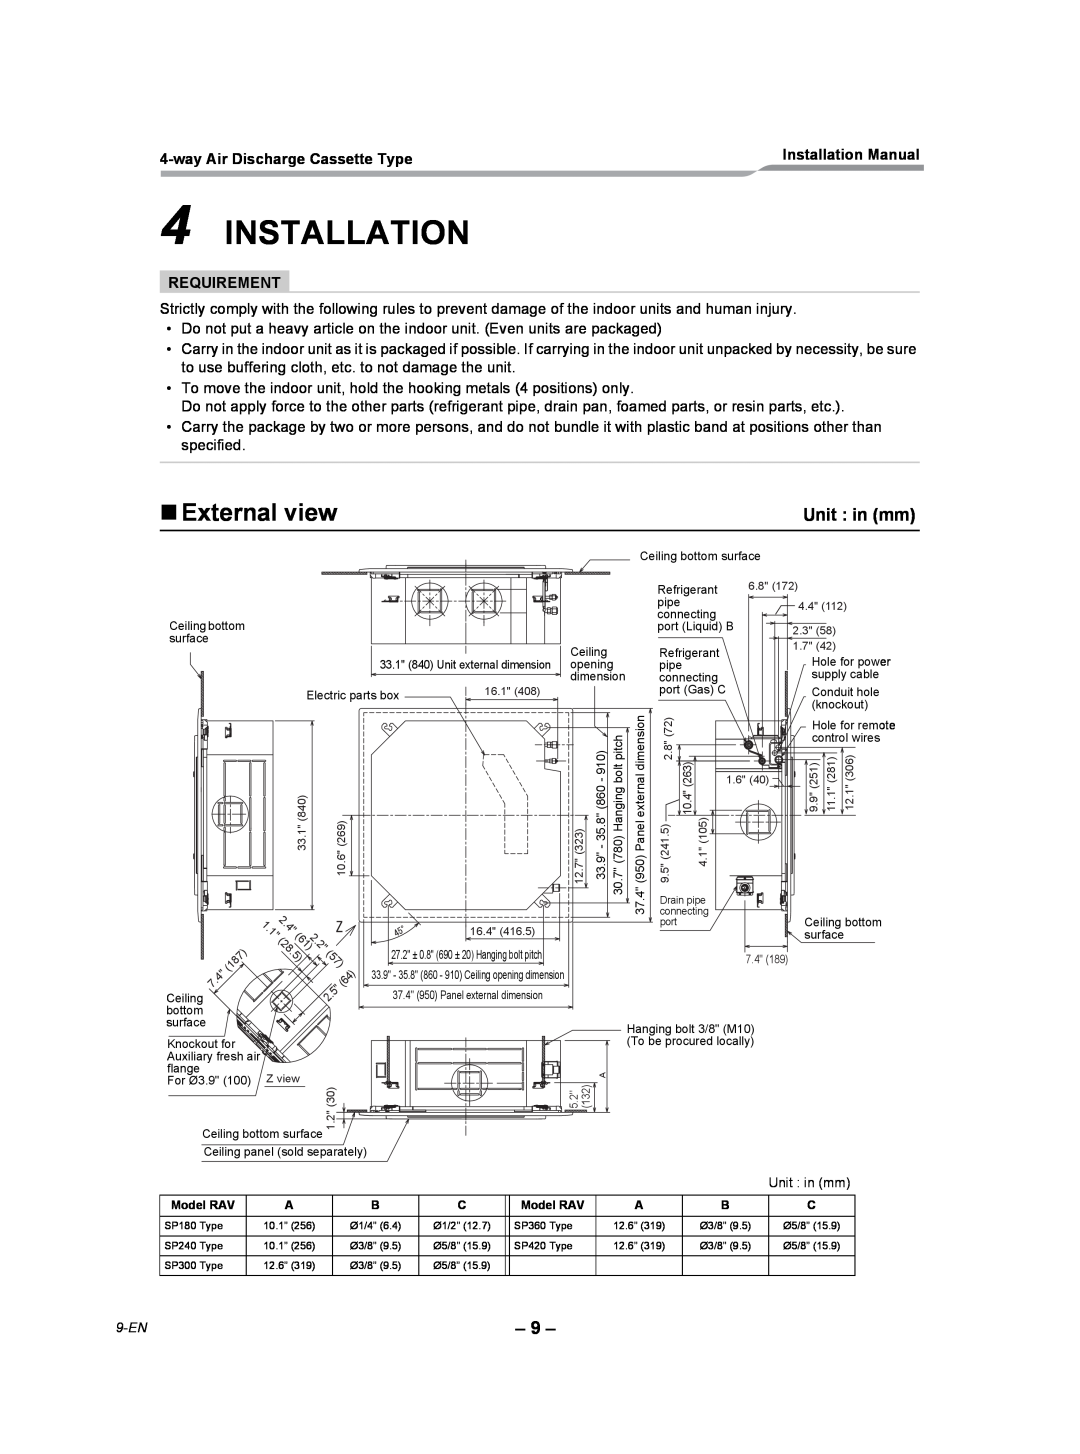 Toshiba RAV-SP180UT-UL Installation, „External view, Unit in mm, wayAir Discharge Cassette Type, Requirement 